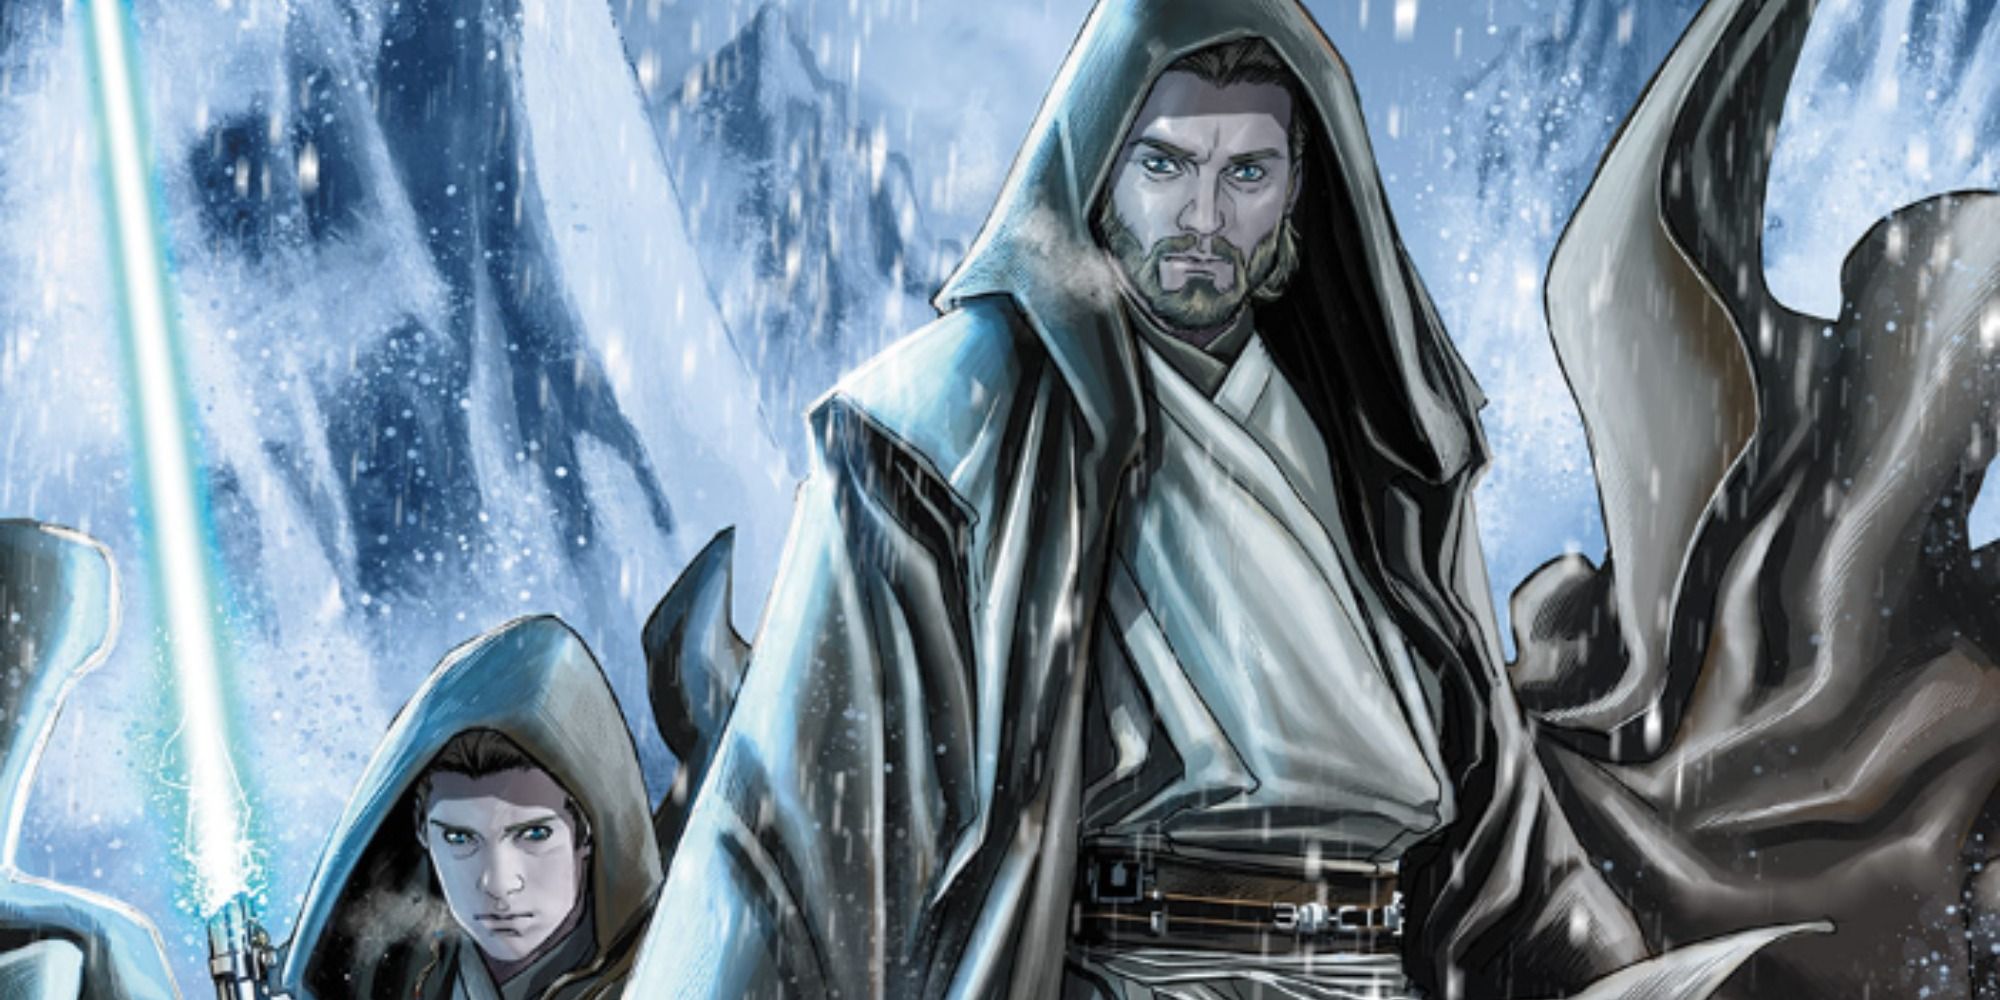 Obi-Wan and Anakin #1, cover art by Marco Checchetto